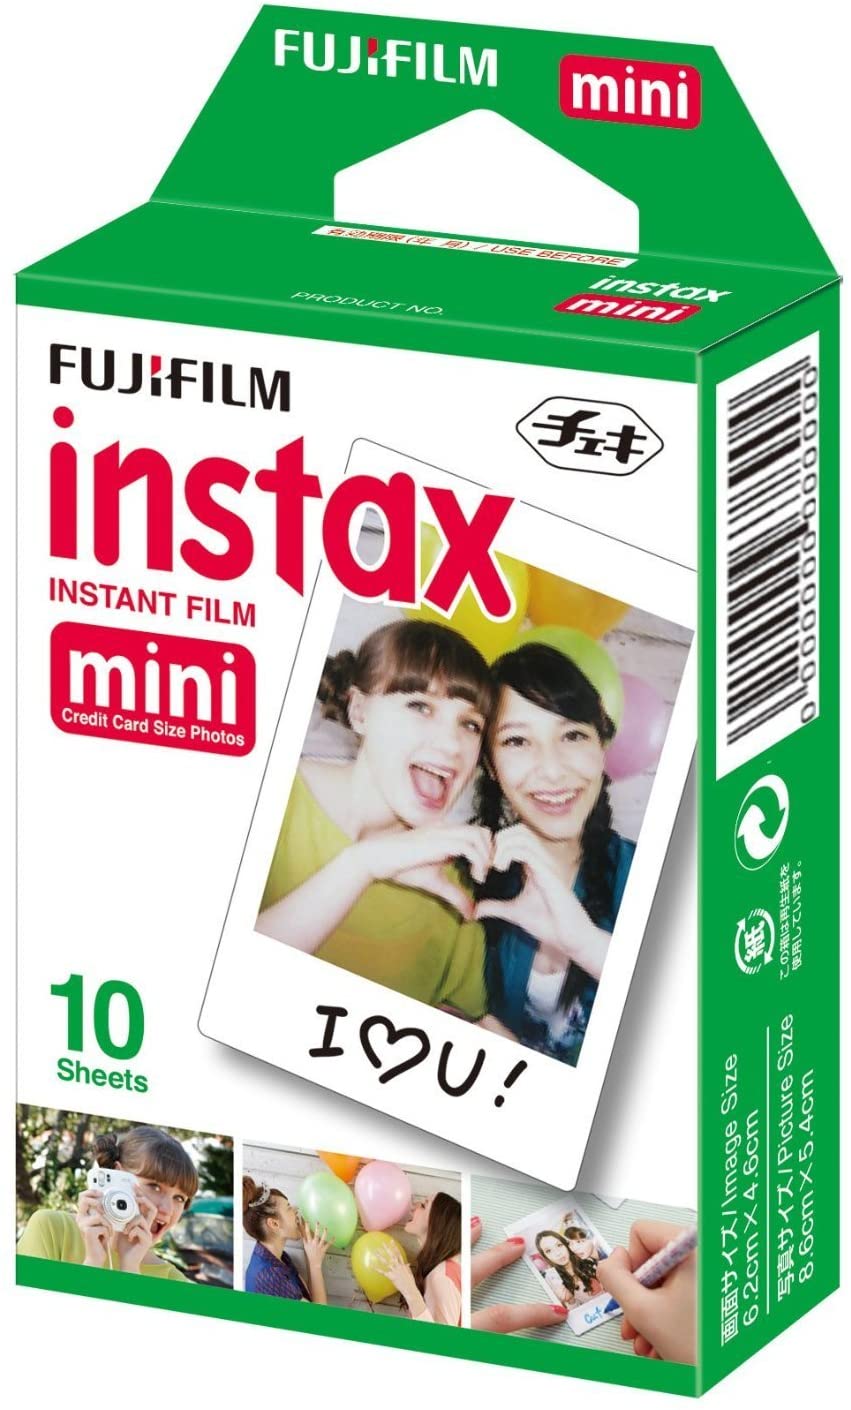 Fujifilm Mini Glossy 10 Sheets Film Expiration November 2021 – JG Superstore